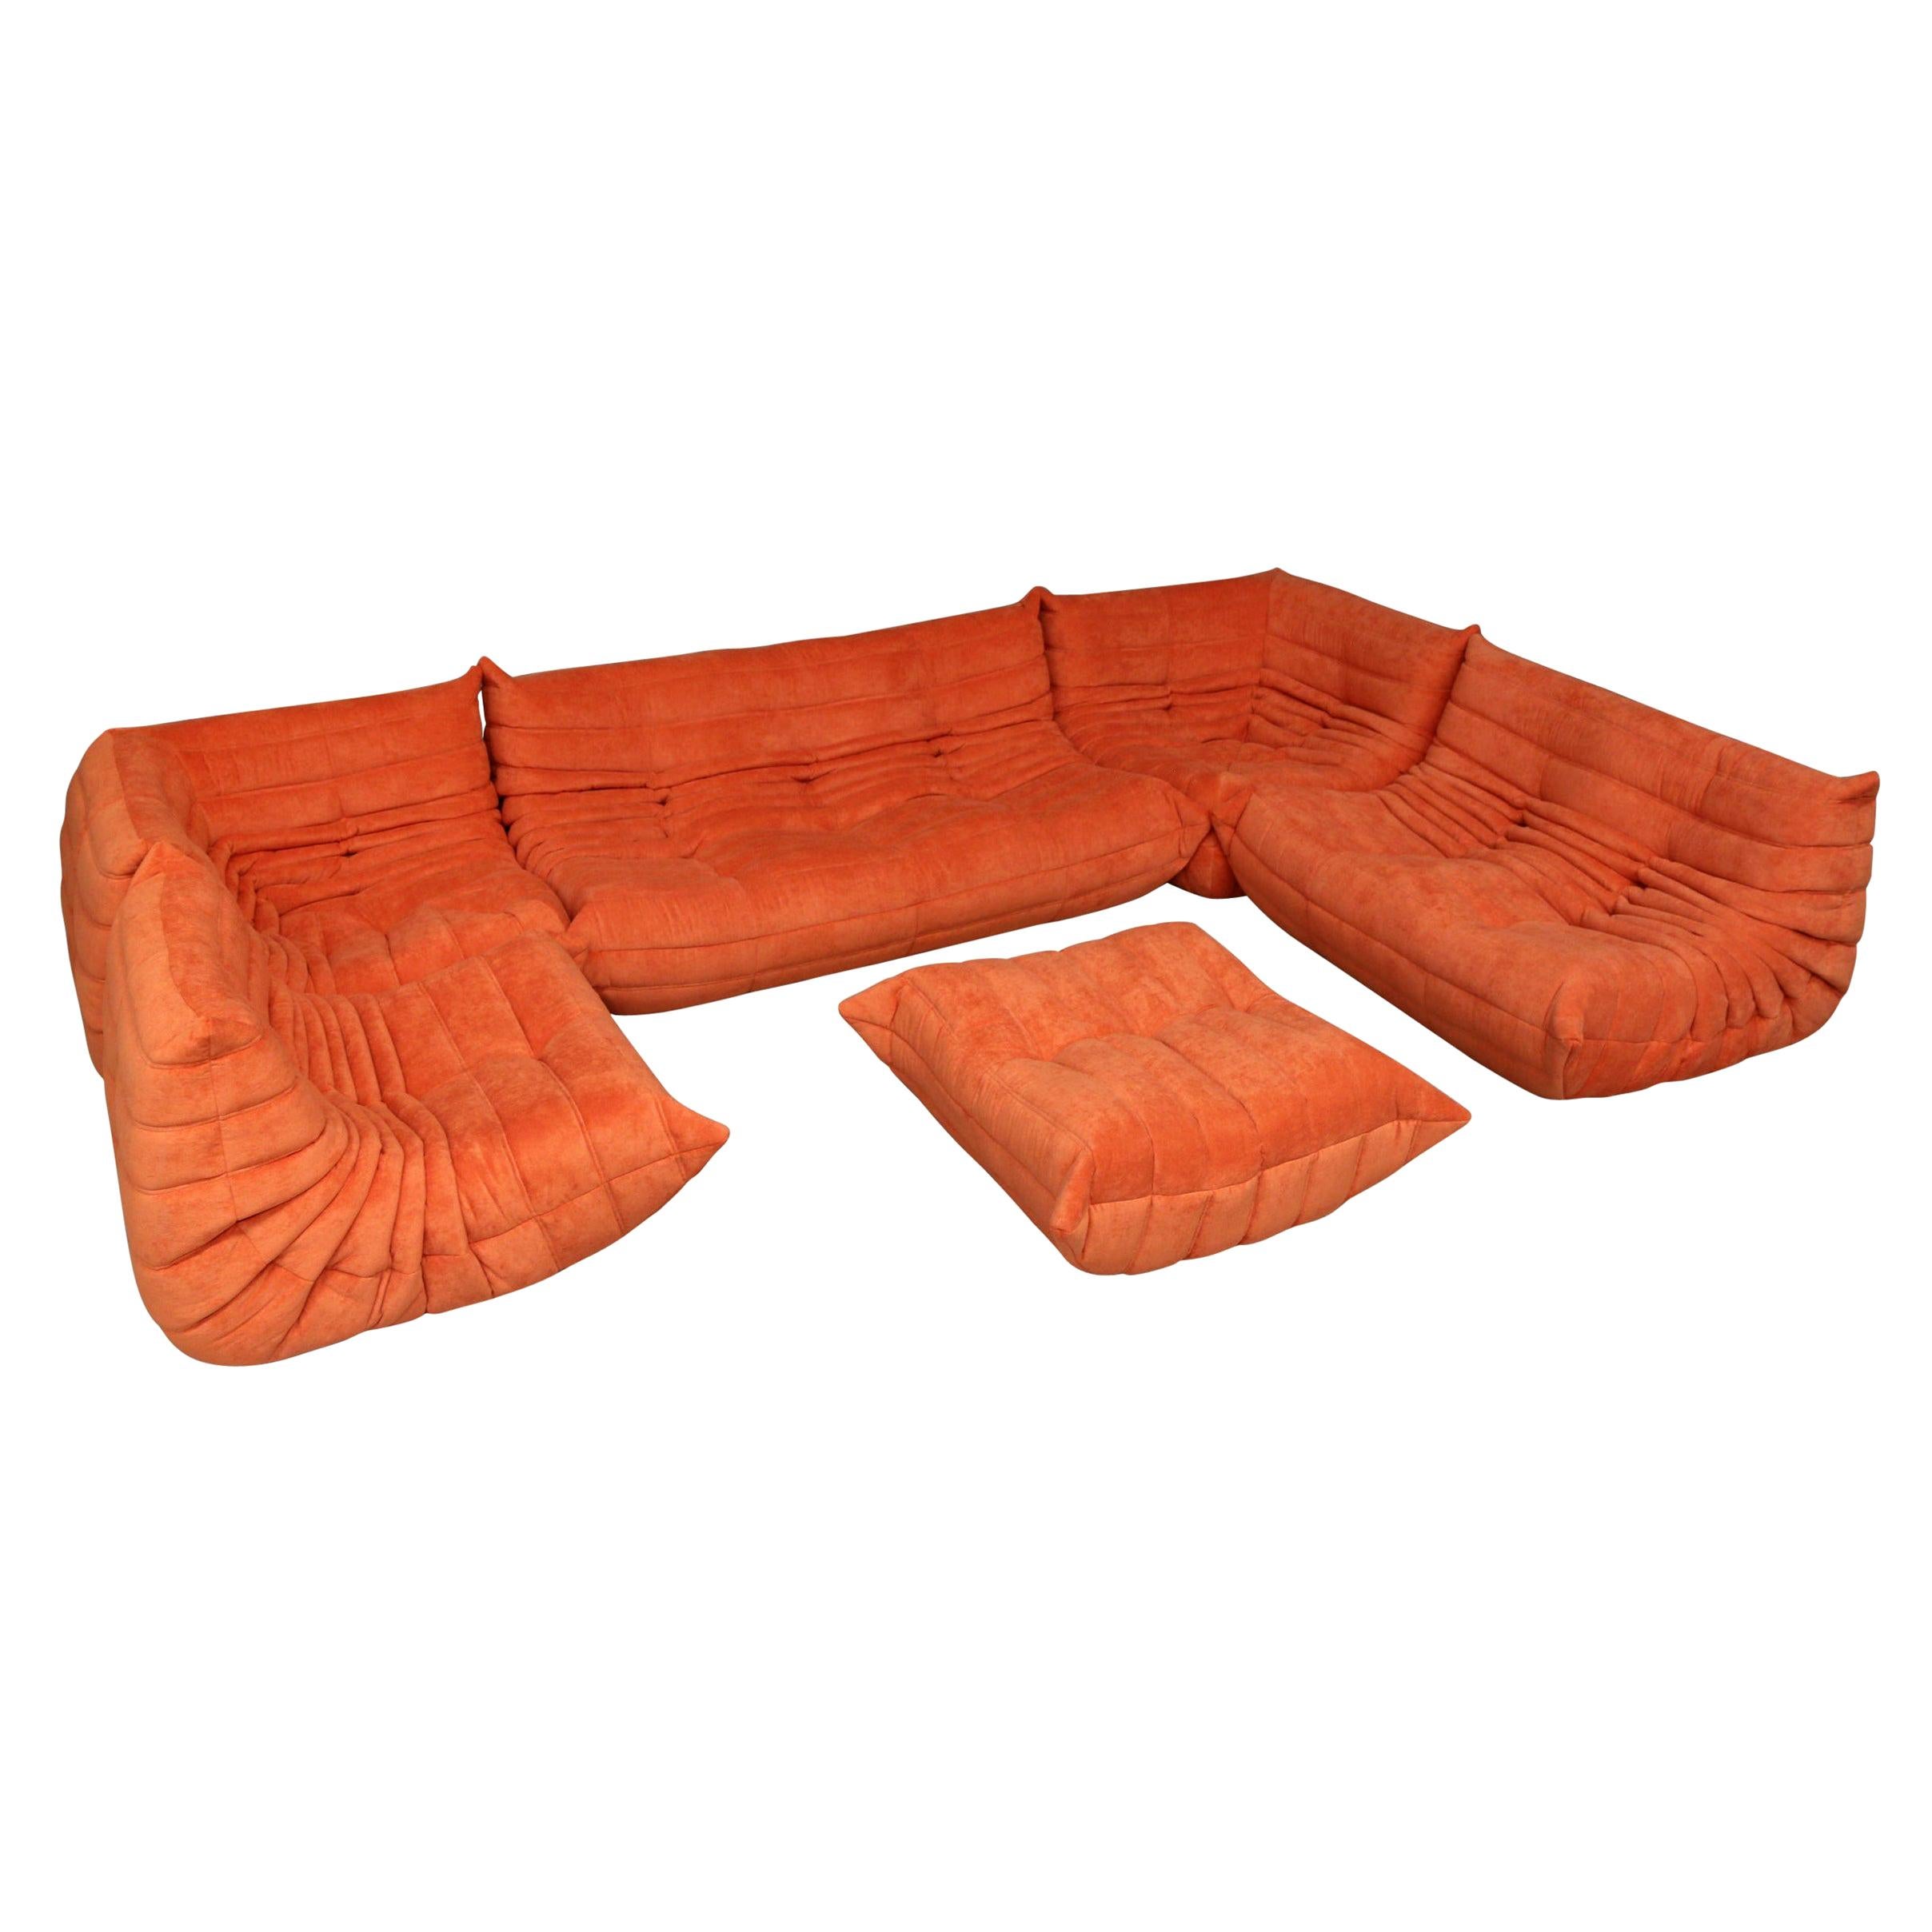 CERTIFIED Ligne Roset TOGO XL sofa in Orange Stain Free Fabric, DIAMOND QUALITY For Sale